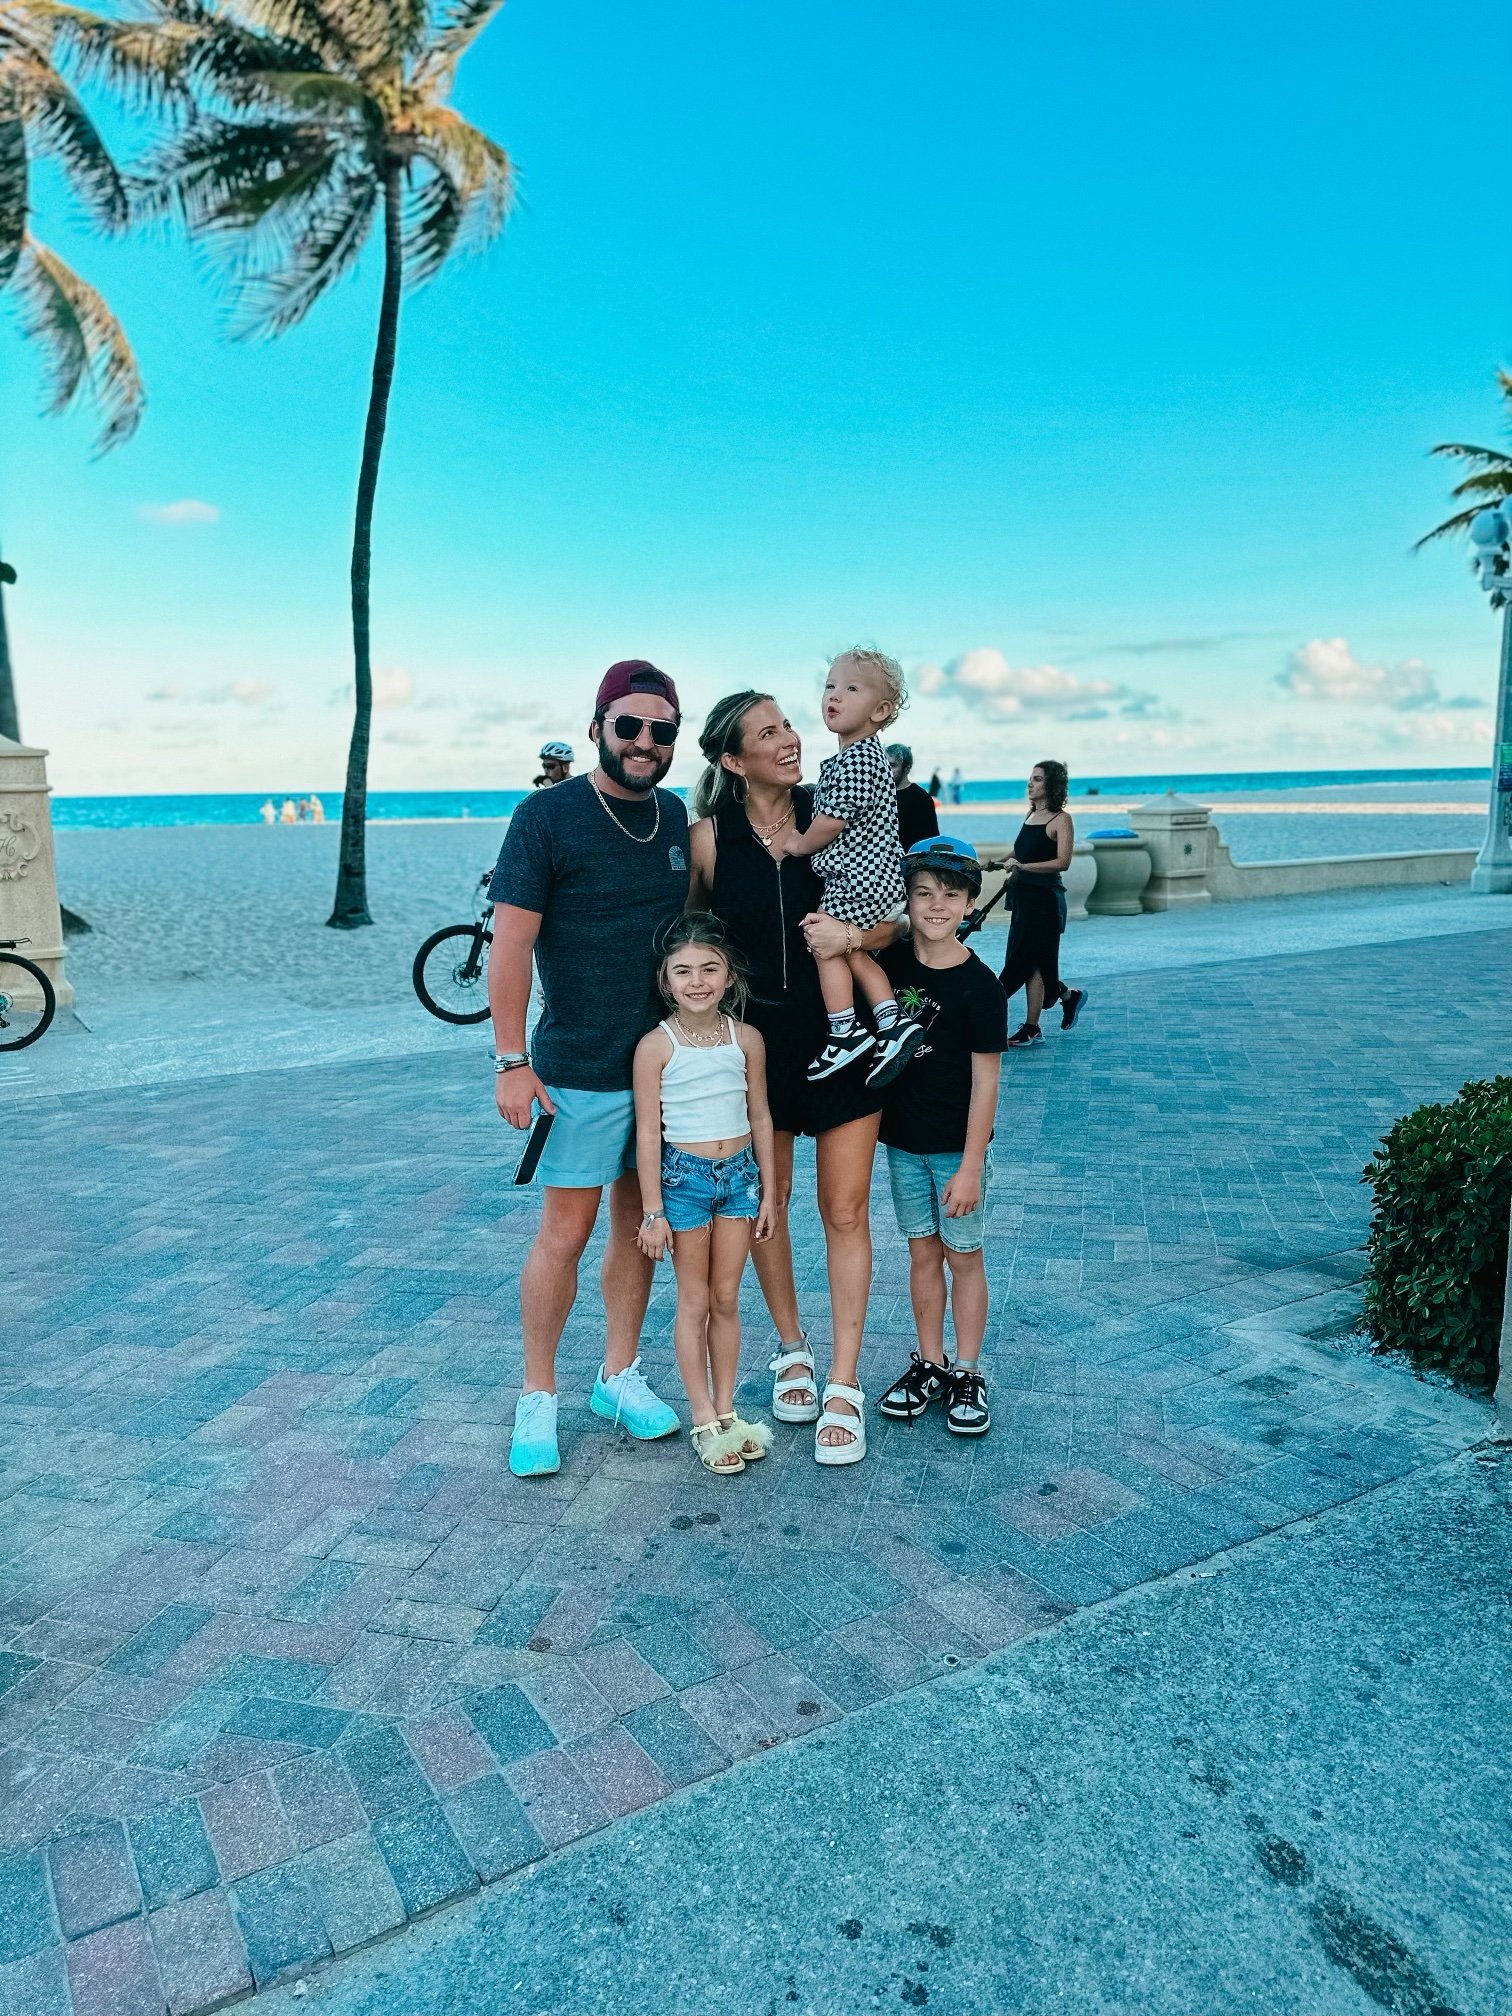 Miami family trip with kids